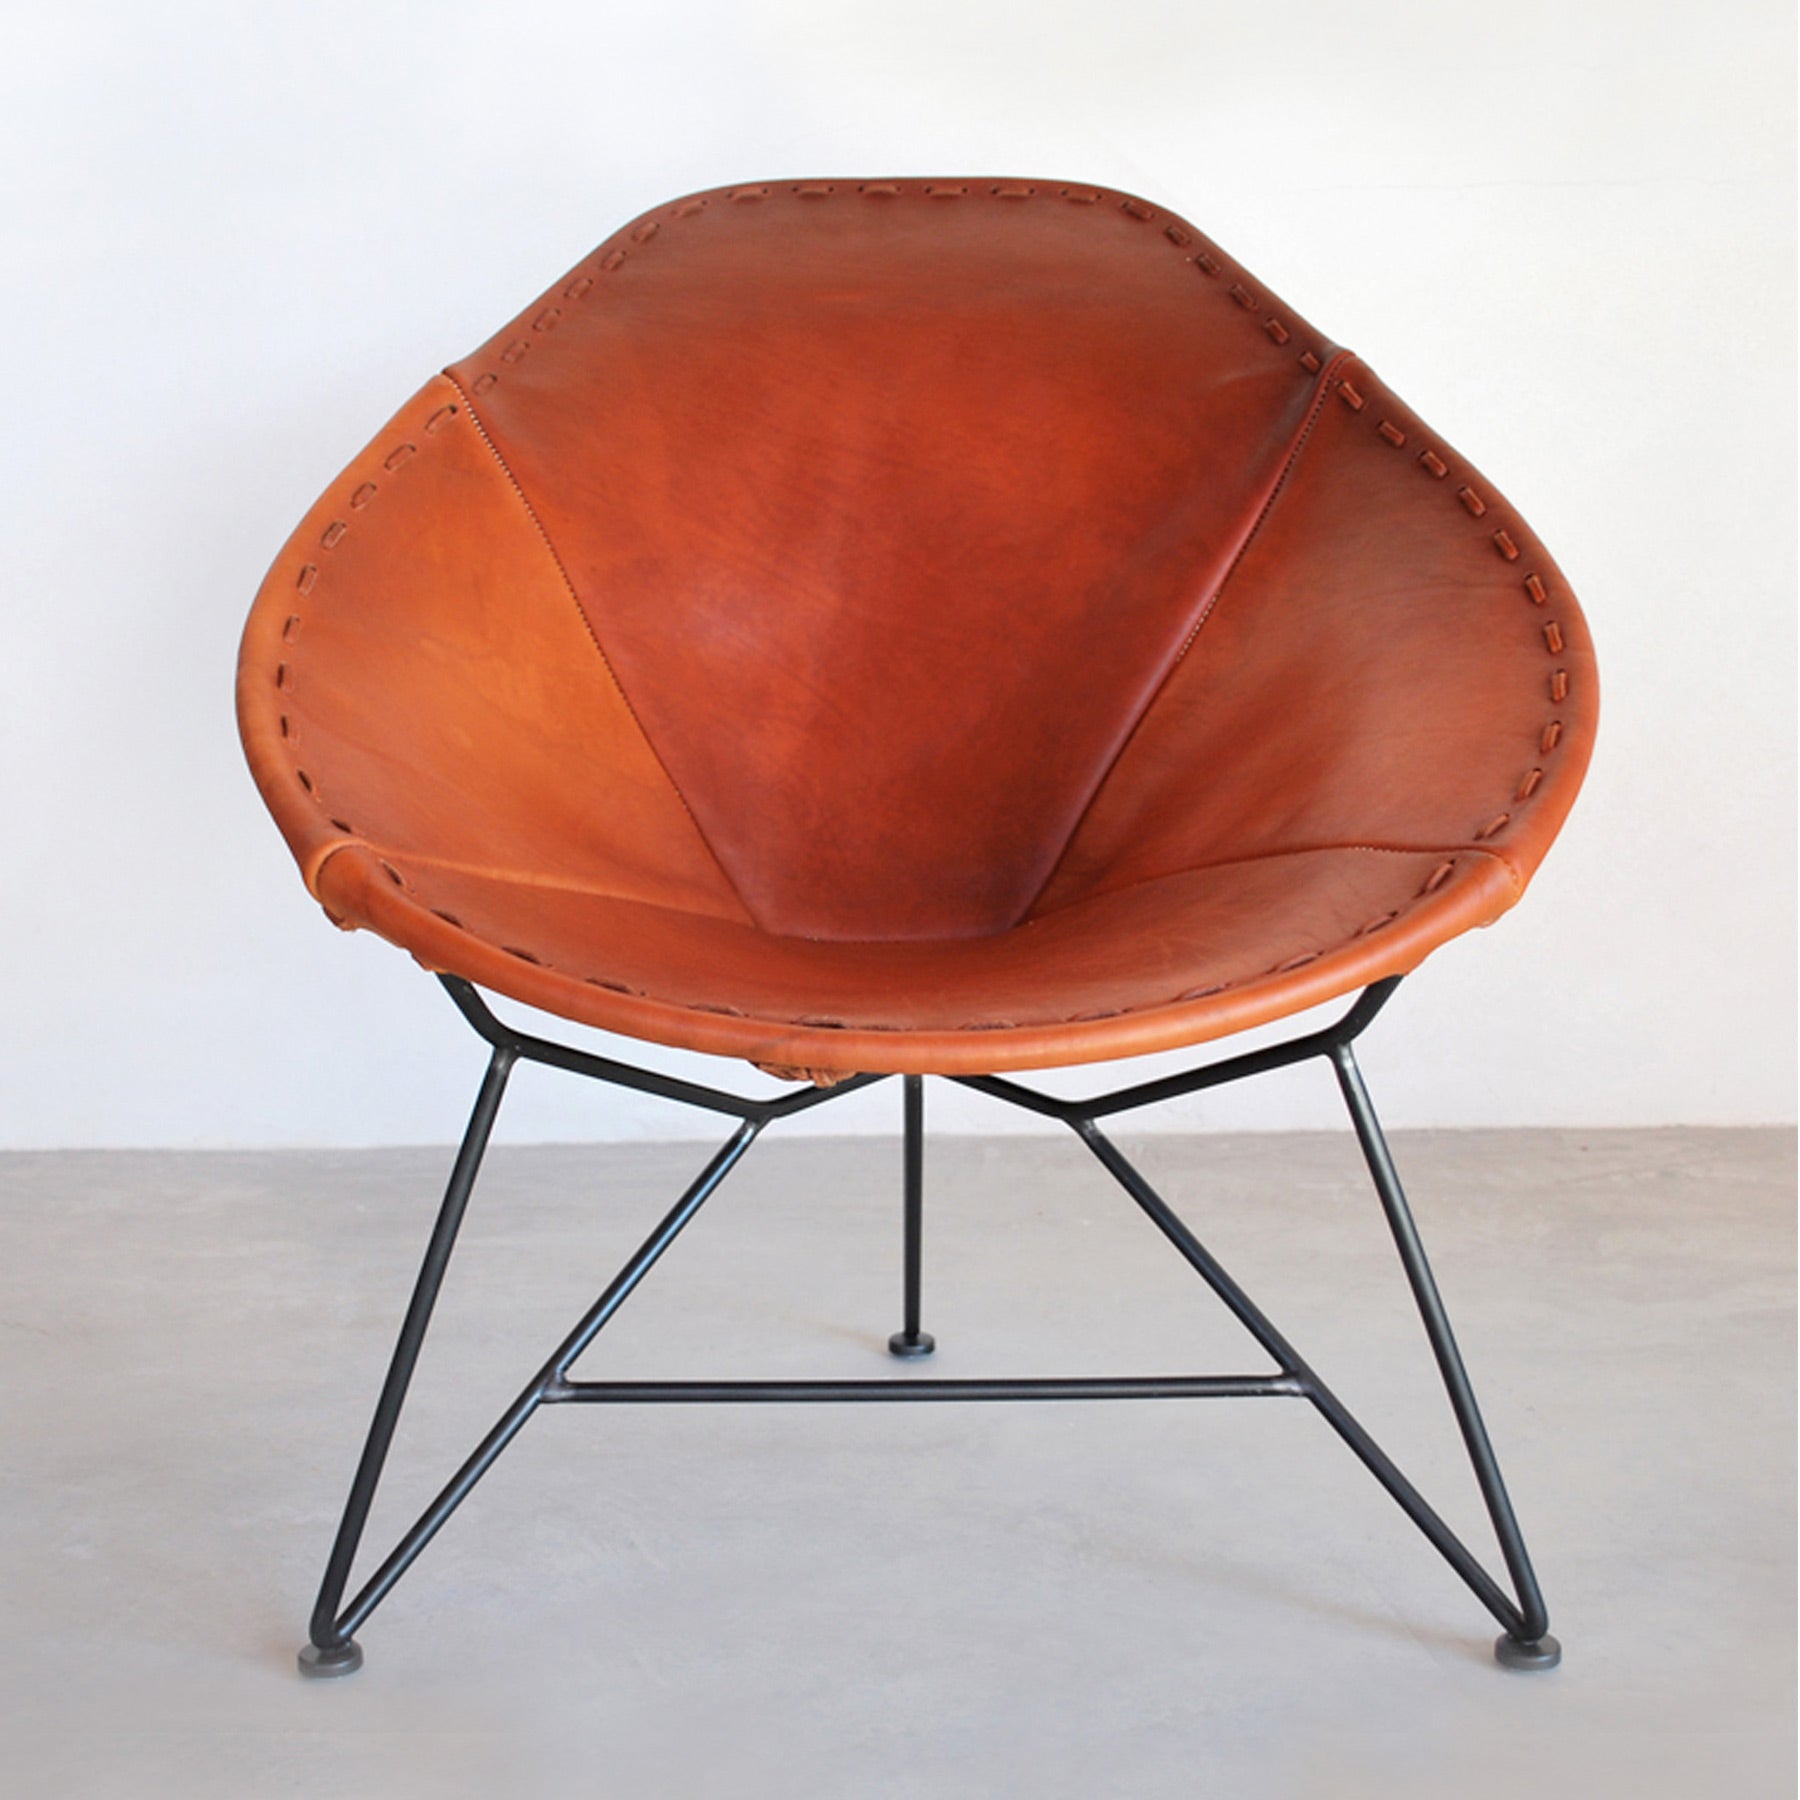 Garza Marfa Leather Oval Chair Heath Ceramics